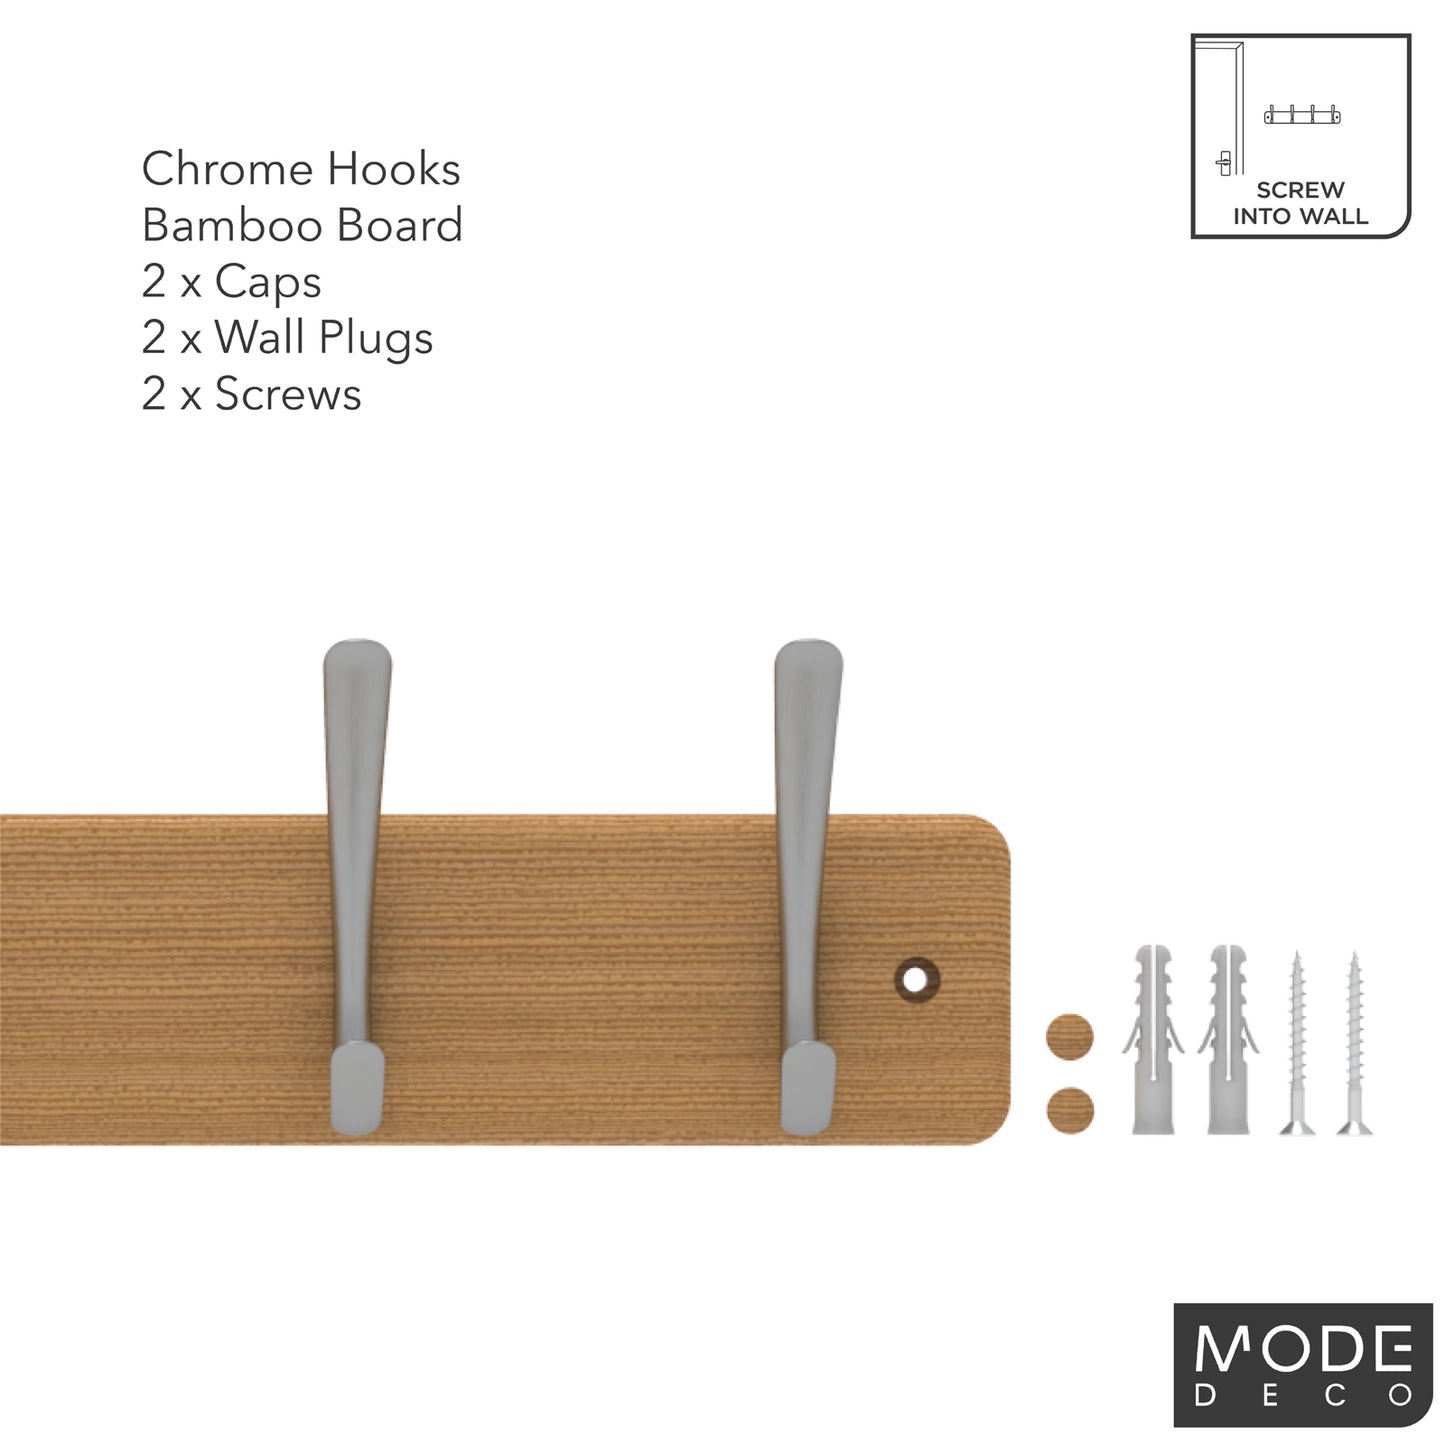 6 Chrome Hooks on Bamboo Board Hat & Coat Rack